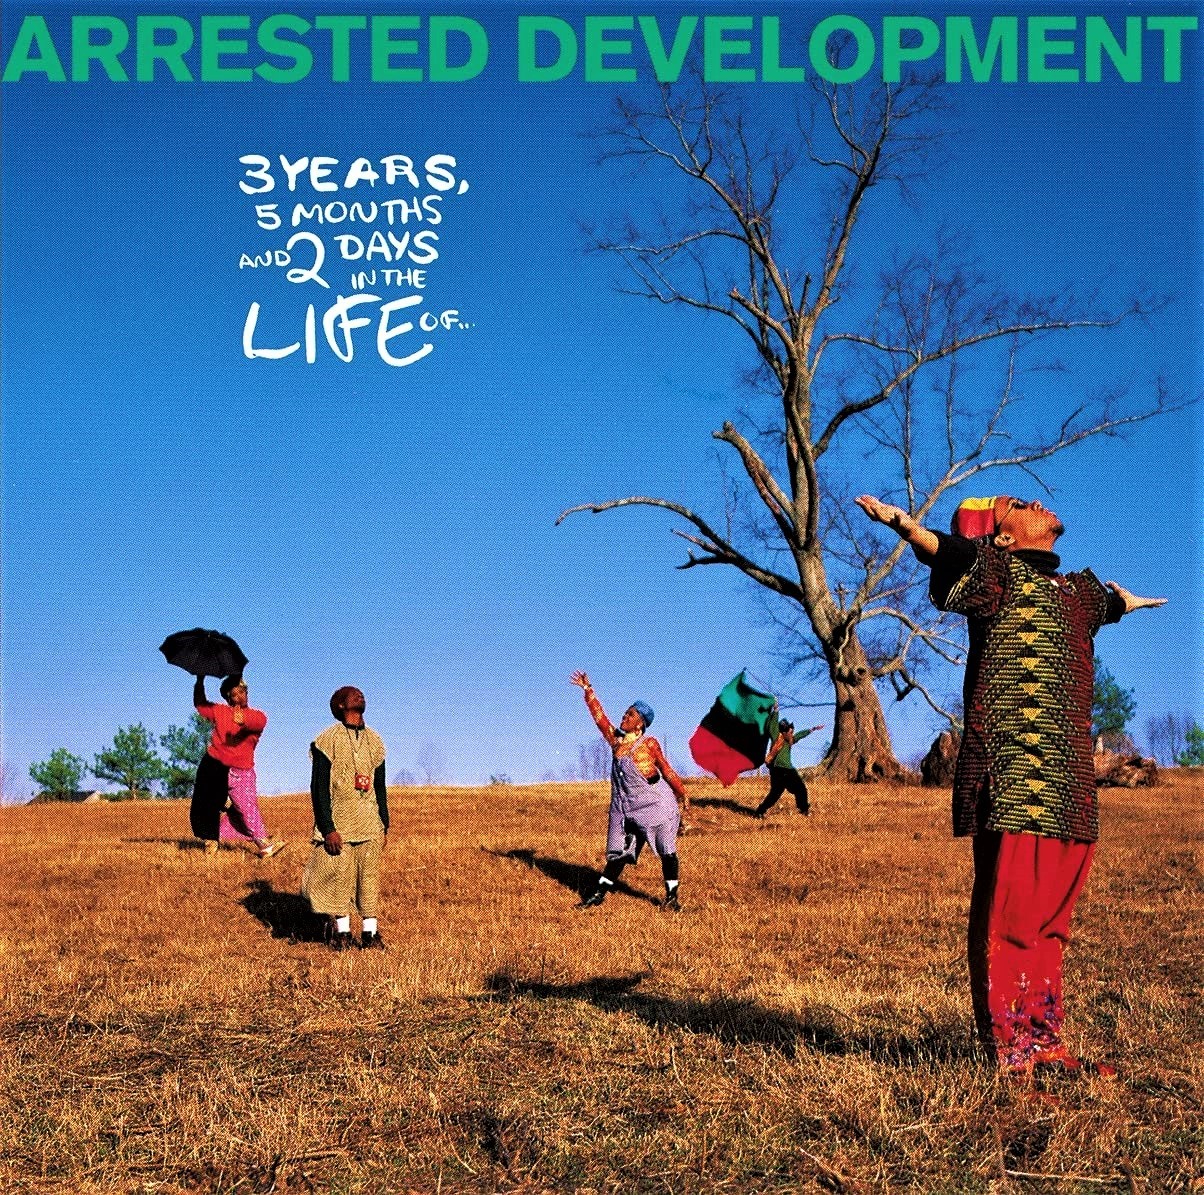 arrested-development-3